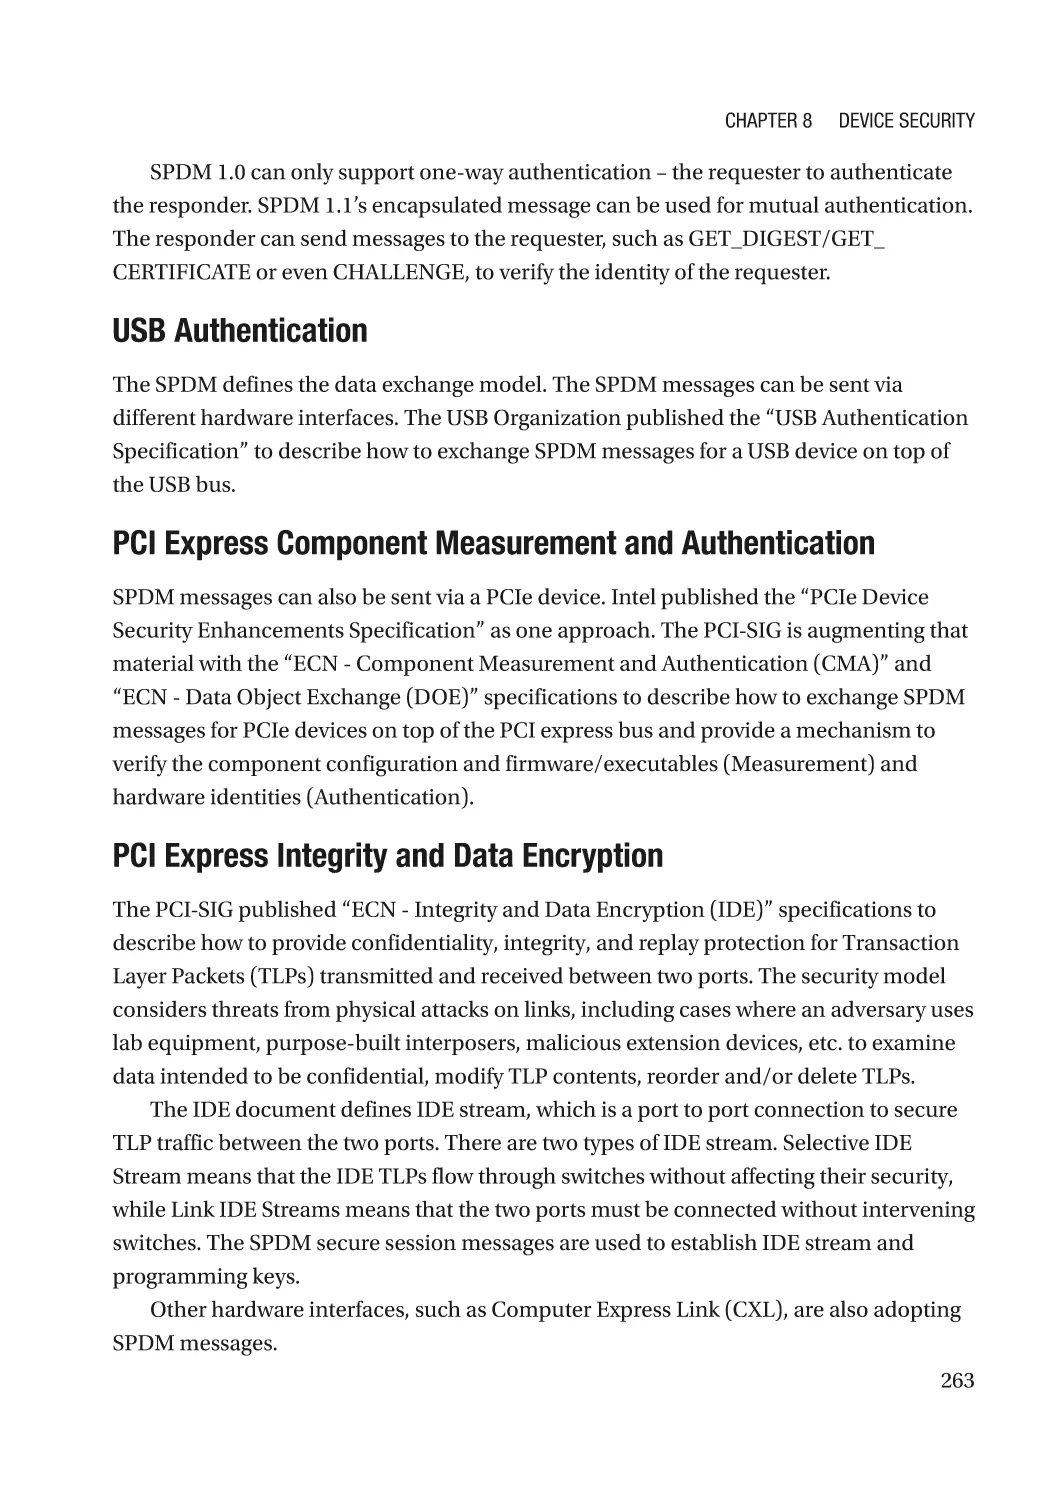 USB Authentication
PCI Express Component Measurement and Authentication
PCI Express Integrity and Data Encryption